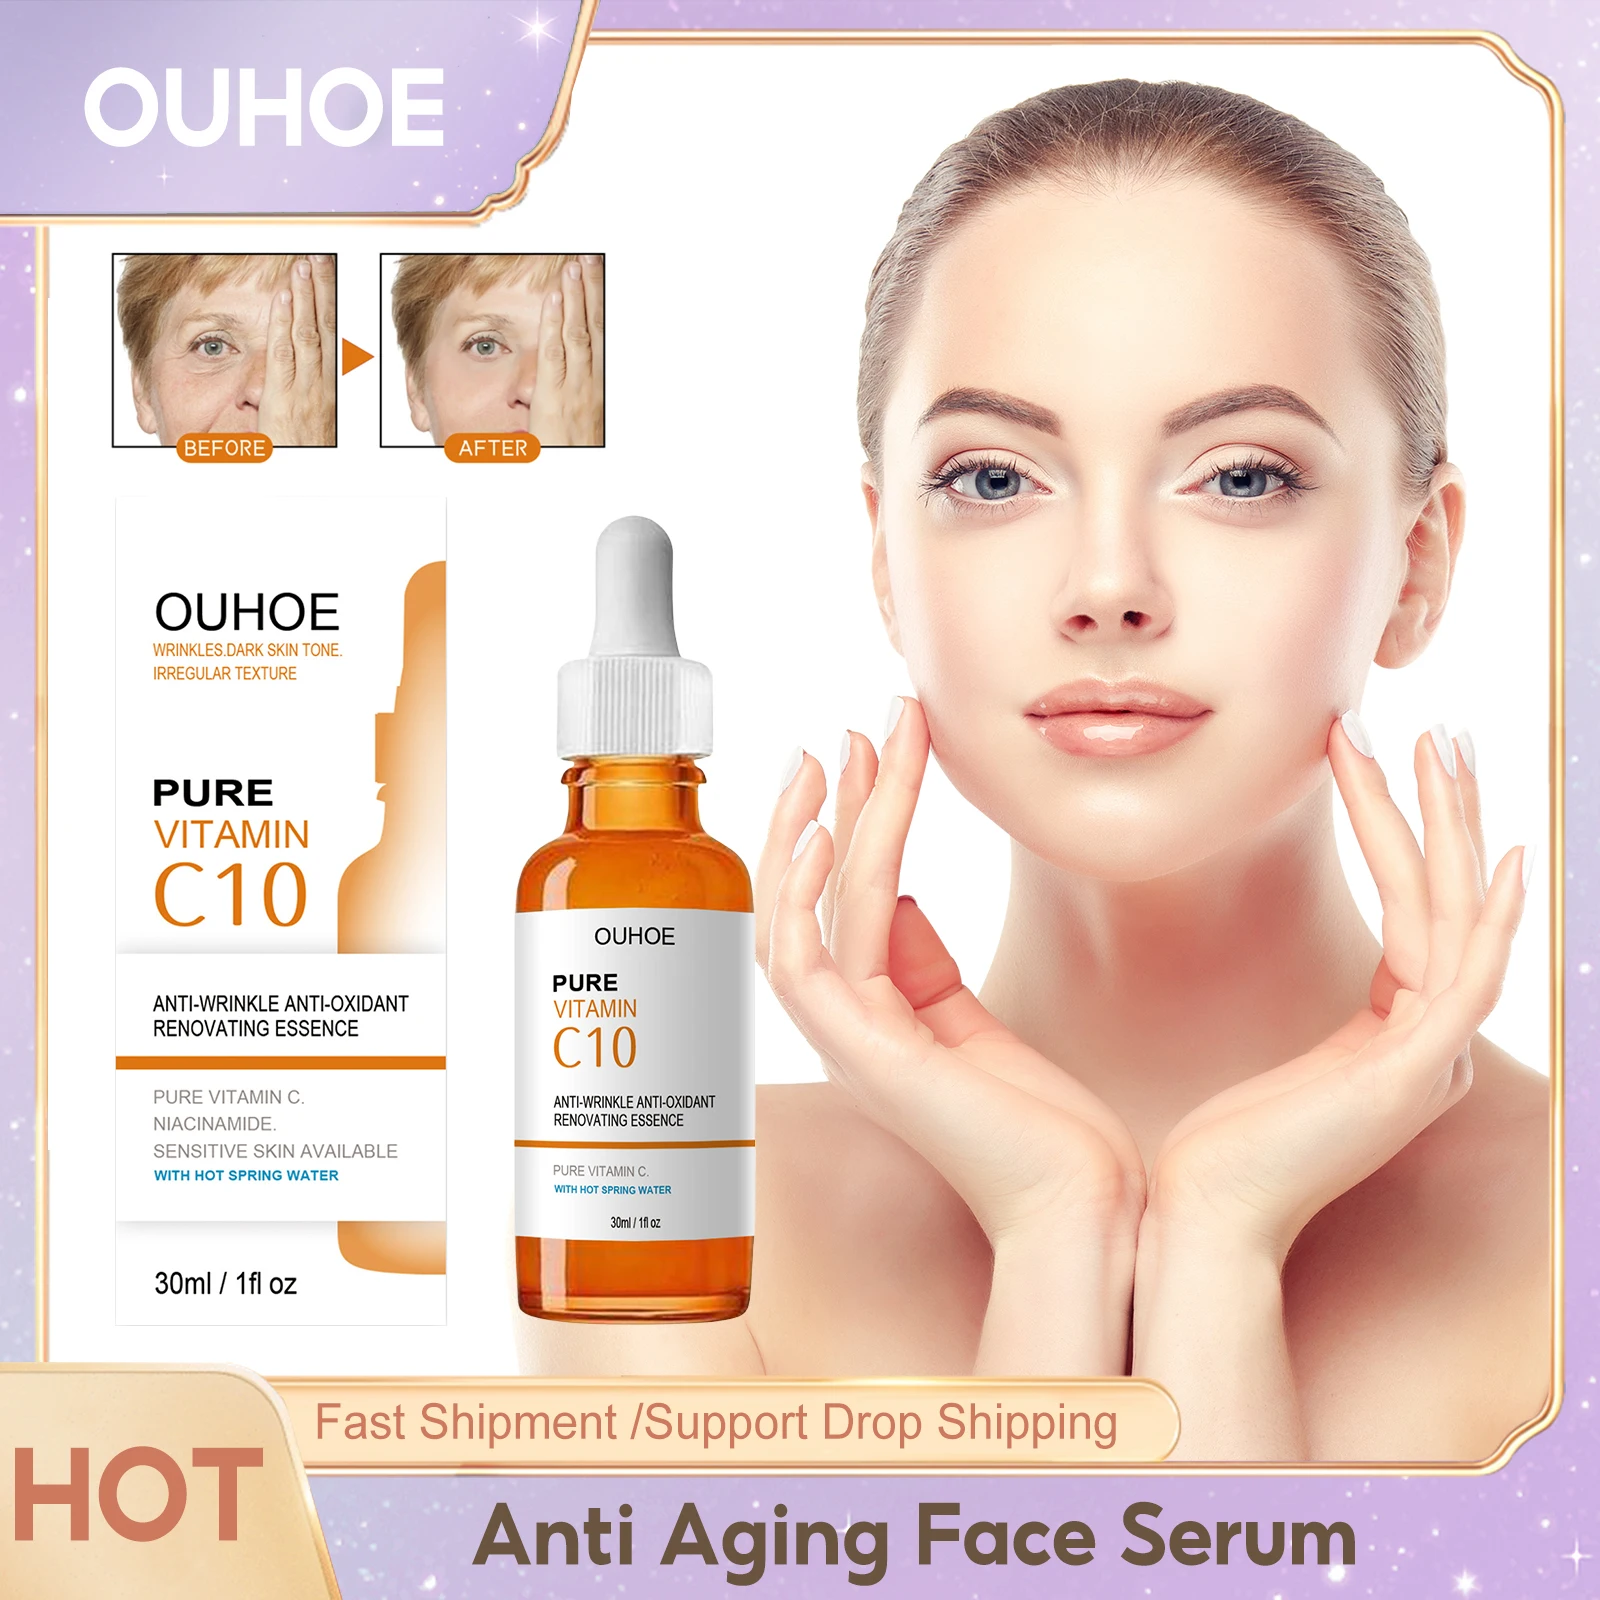 

Anti Aging Face Serum Nourish Skin Fade Fine Lines Remove Wrinkle Firming Moisturizer Hyaluronic Acid Vitamin C10 Facial Essence